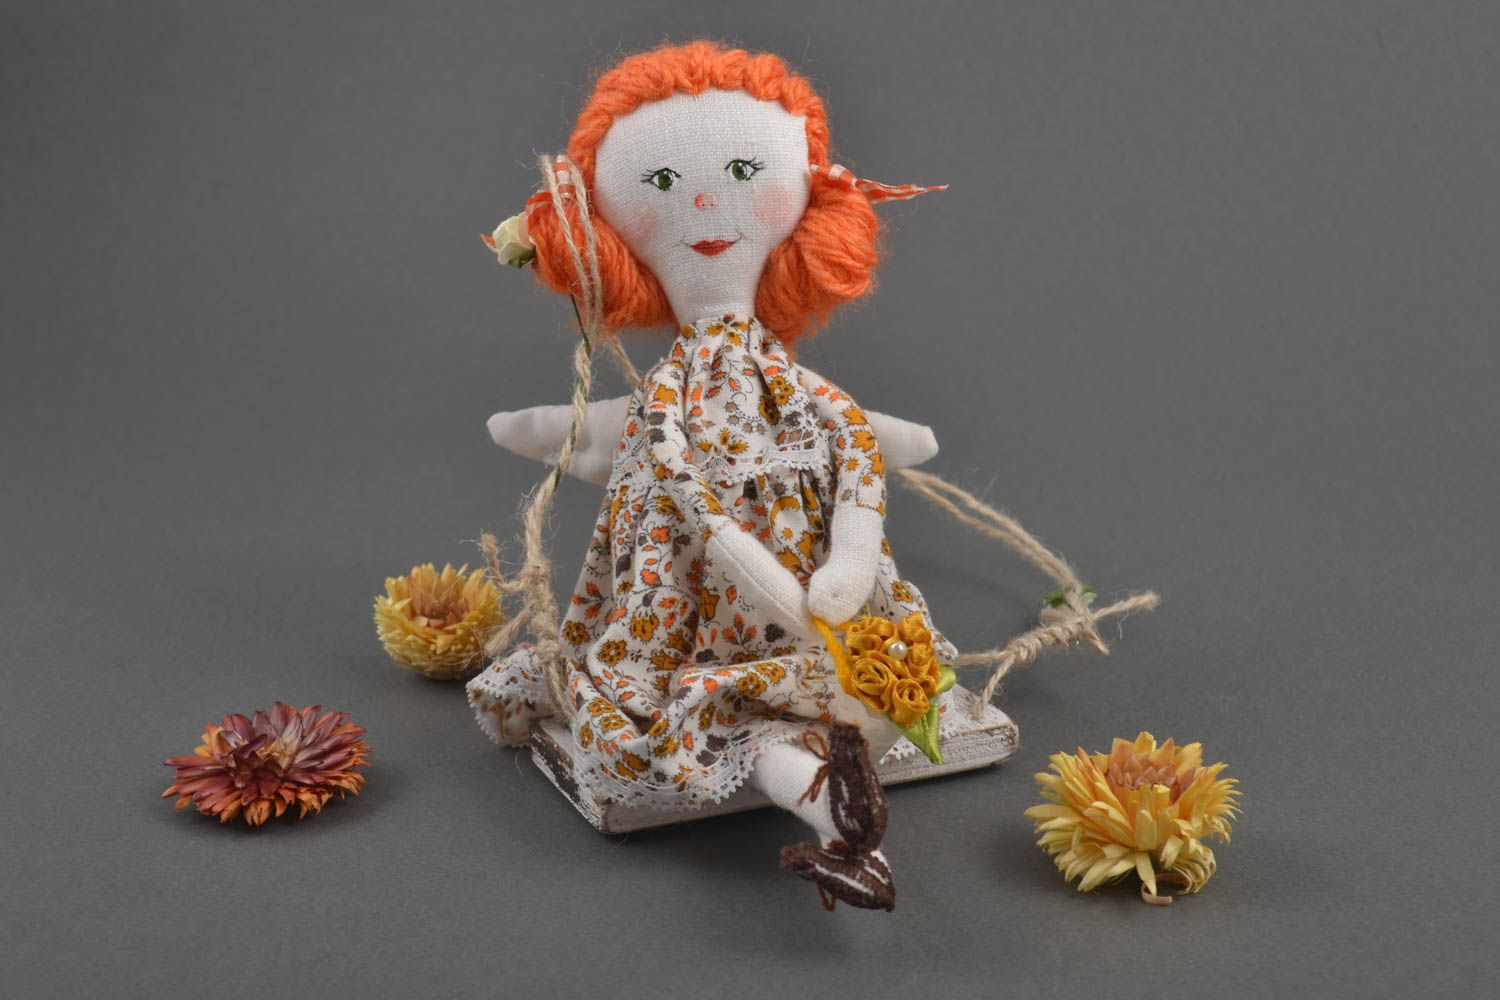 Handmade rag doll soft interior toy nursery design decorative use only photo 1